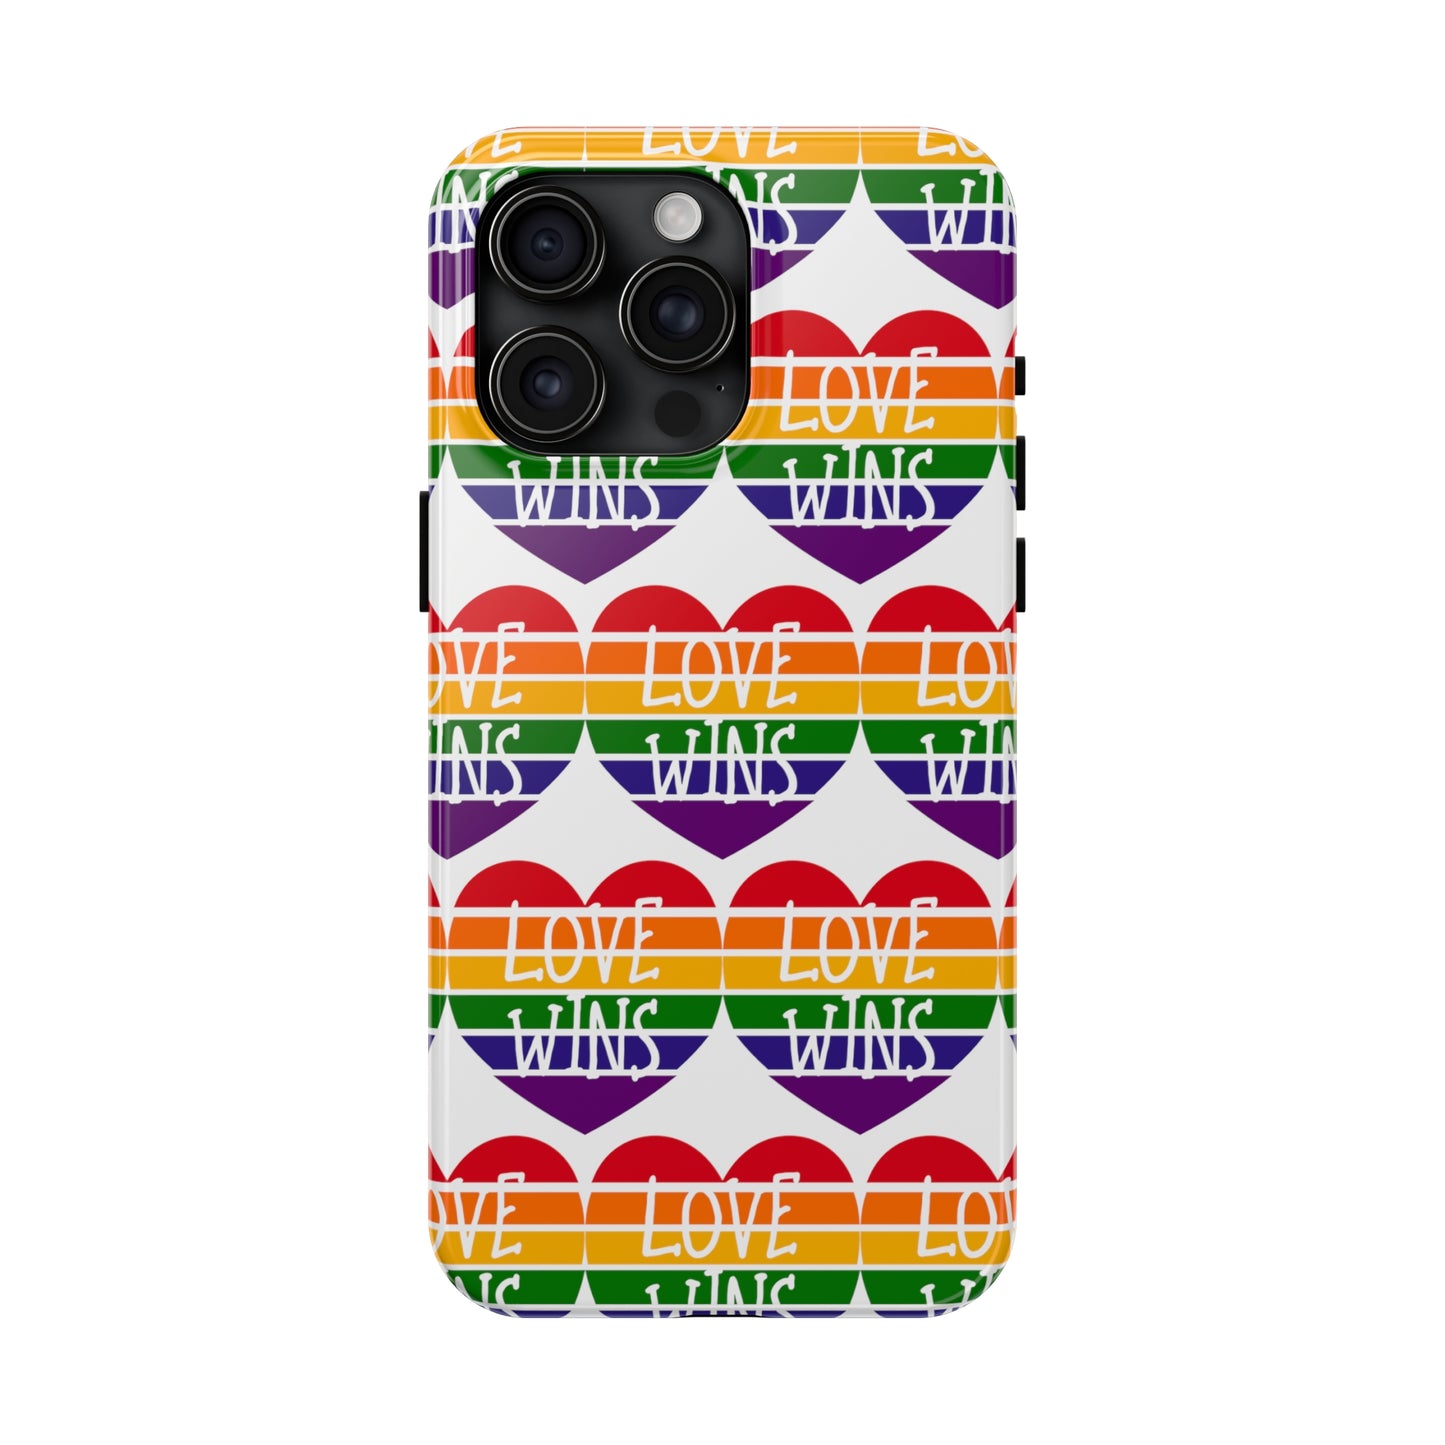 Rainbow Love Wins: iPhone Tough Case Design - Wireless Charging - Superior Protection - Original Designs by TheGlassyLass.com